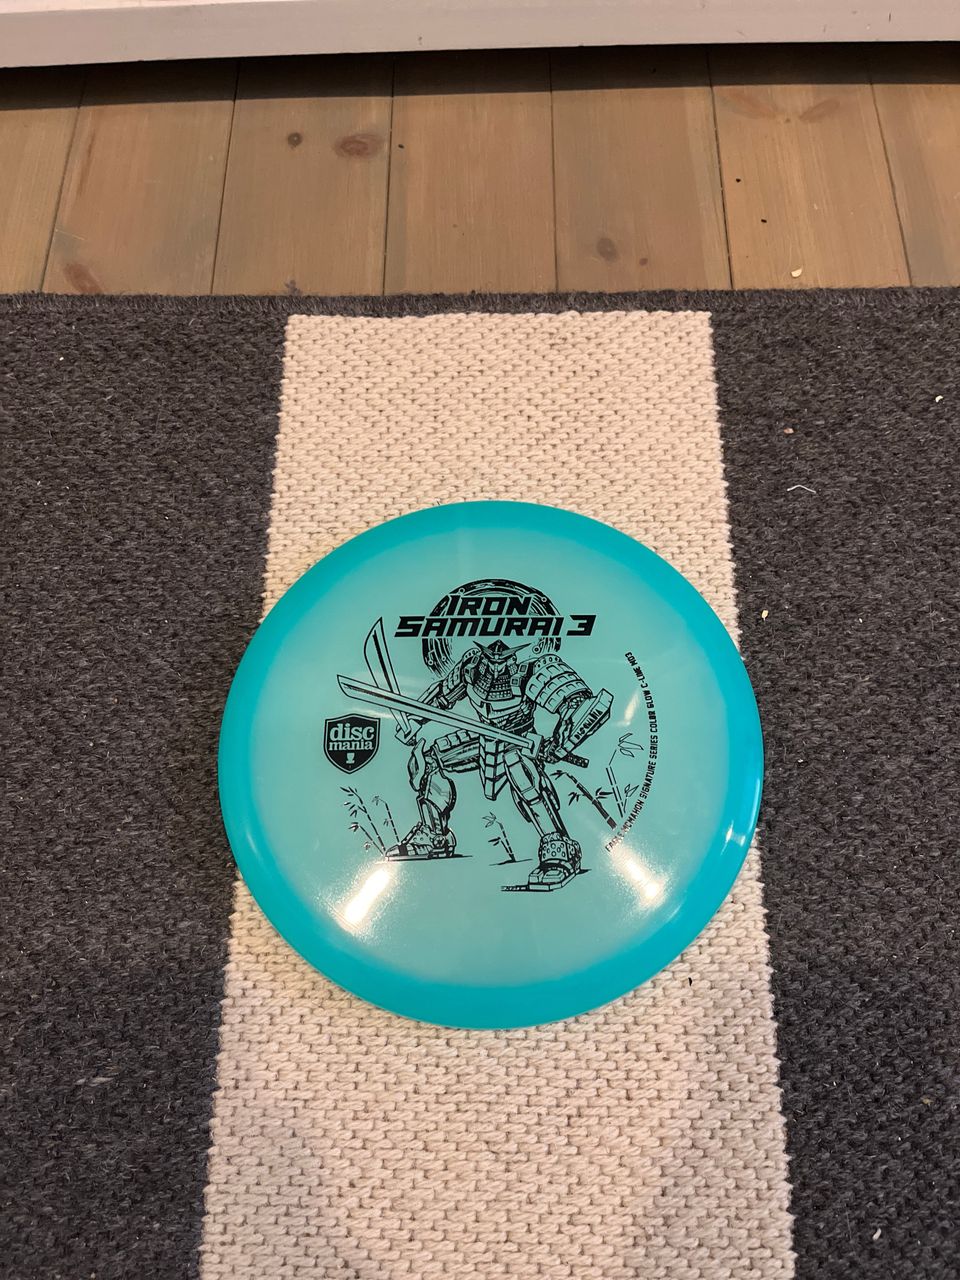 Iron samurai 3 frisbeegolf